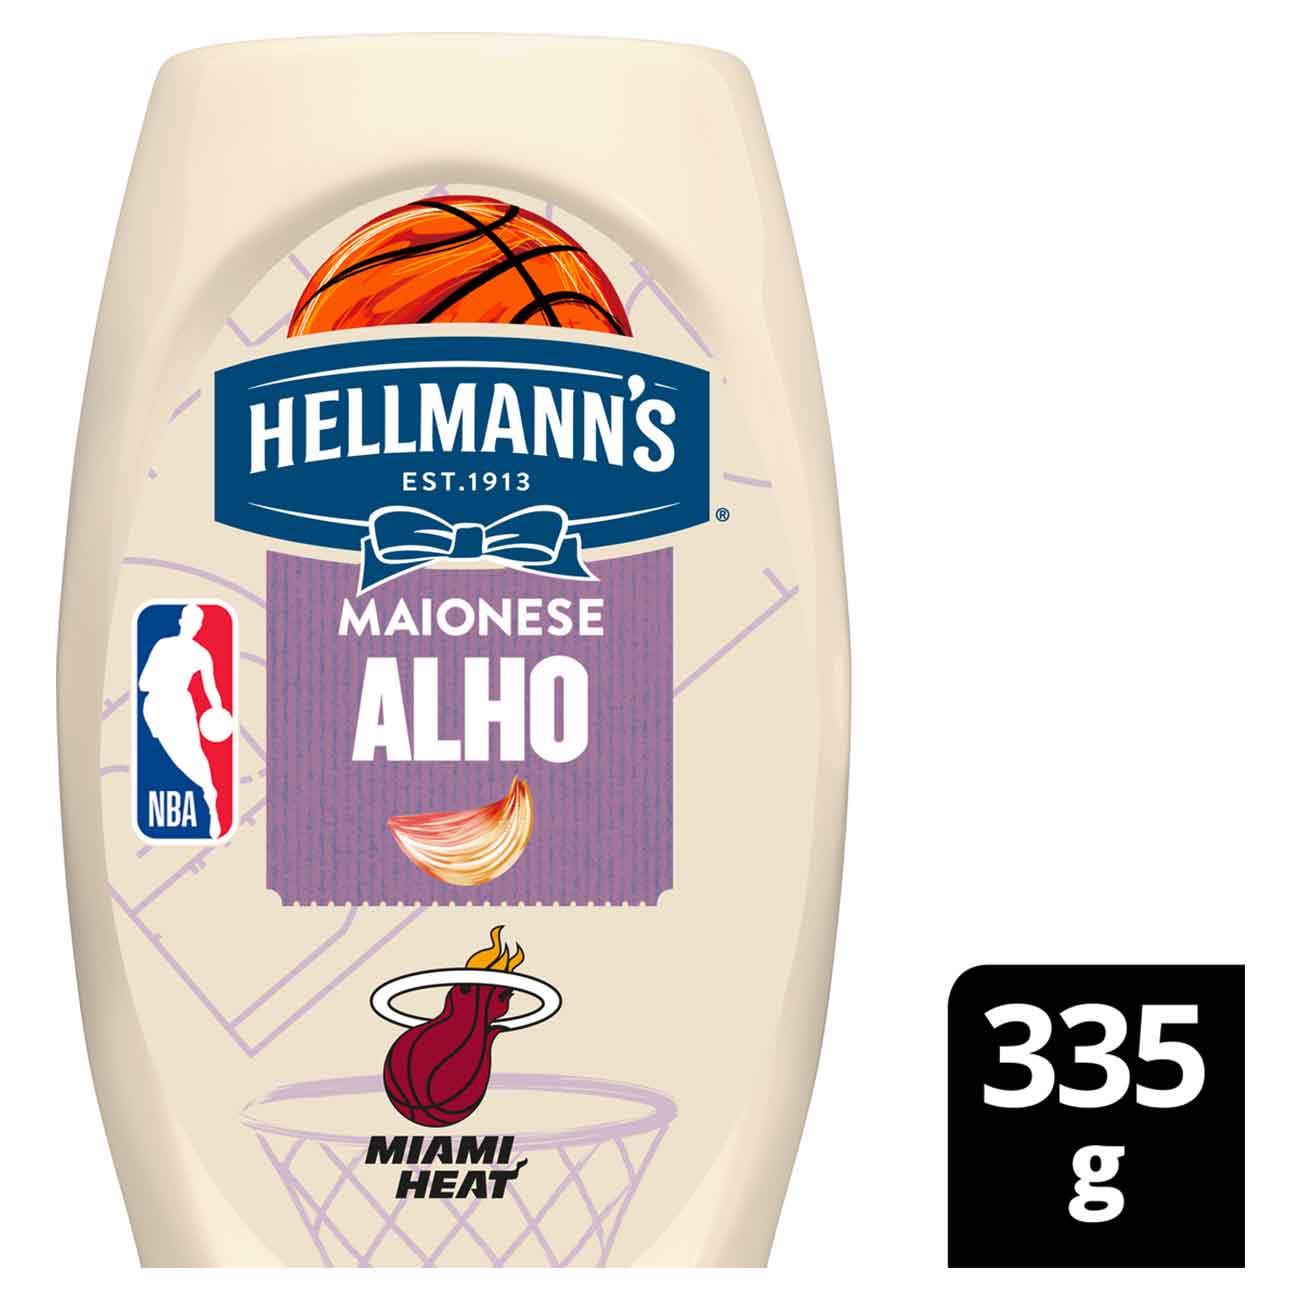 Maionese Alho NBA Miami Heat Hellmann's 335g